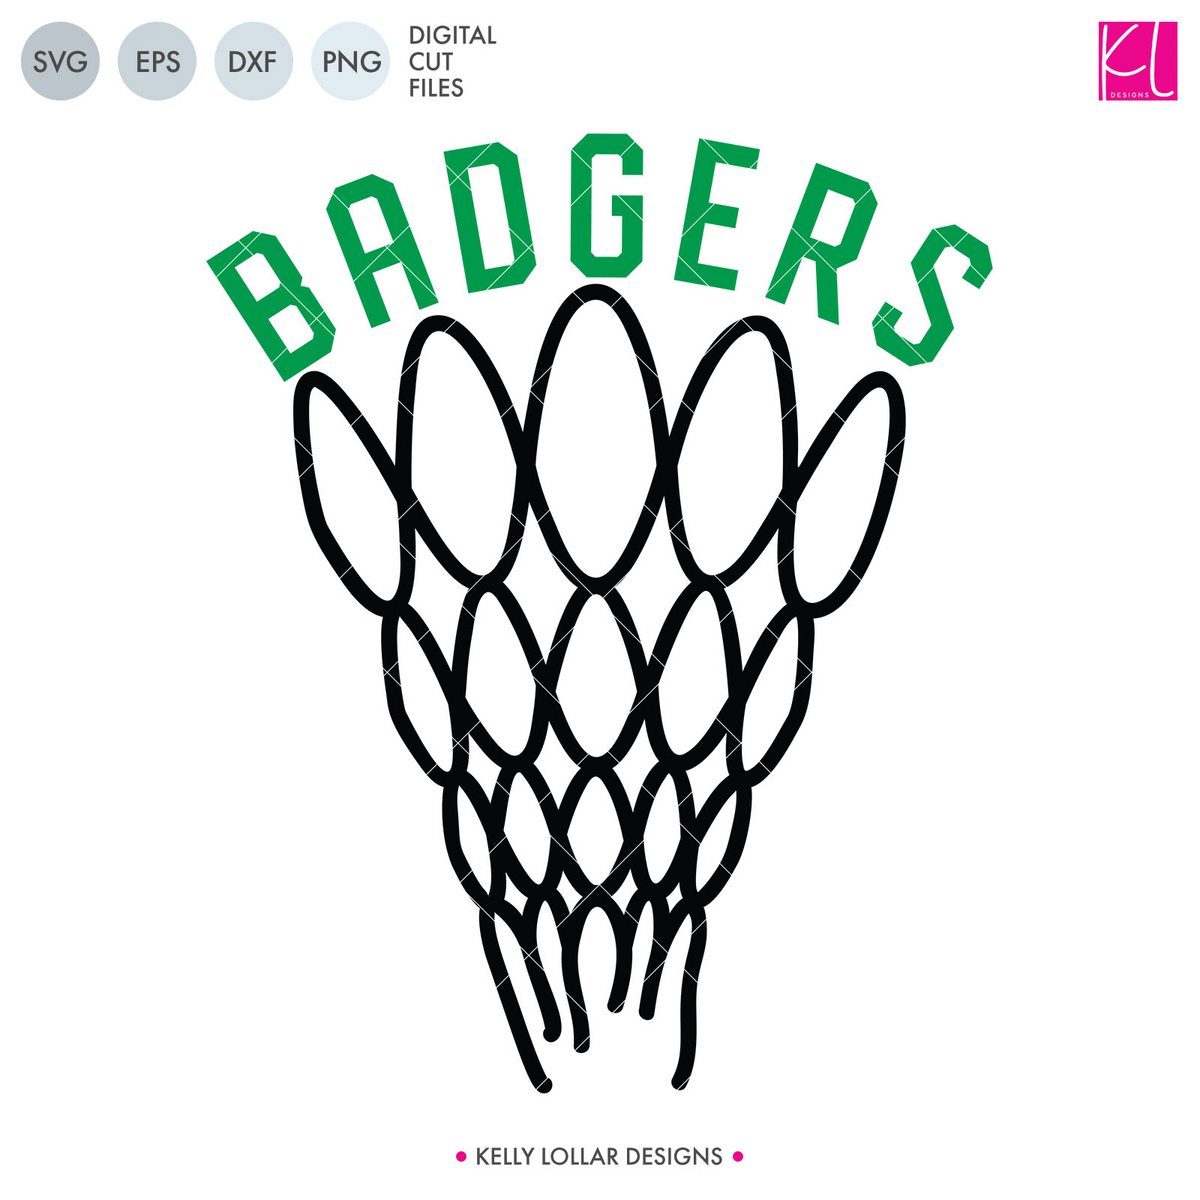 Badgers Basketball Bundle | SVG DXF EPS PNG Cut Files